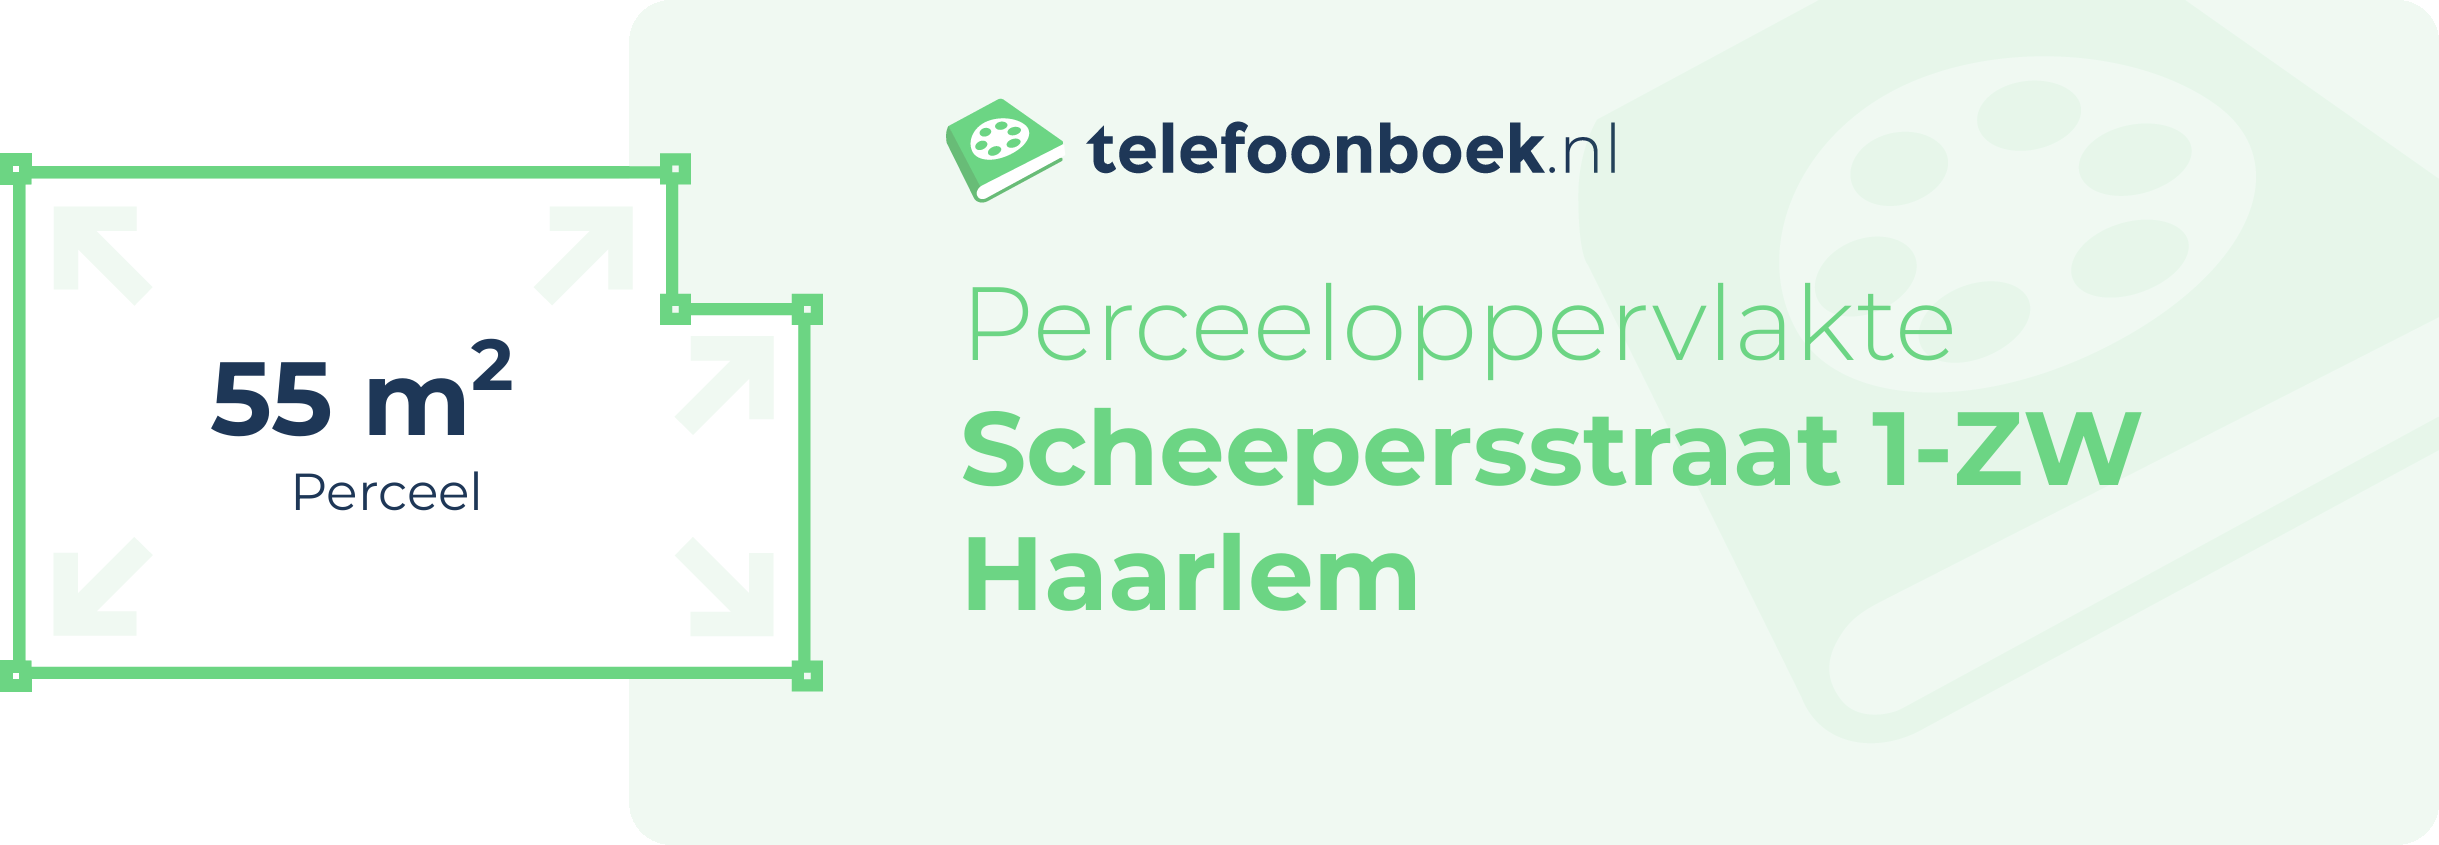 Perceeloppervlakte Scheepersstraat 1-ZW Haarlem